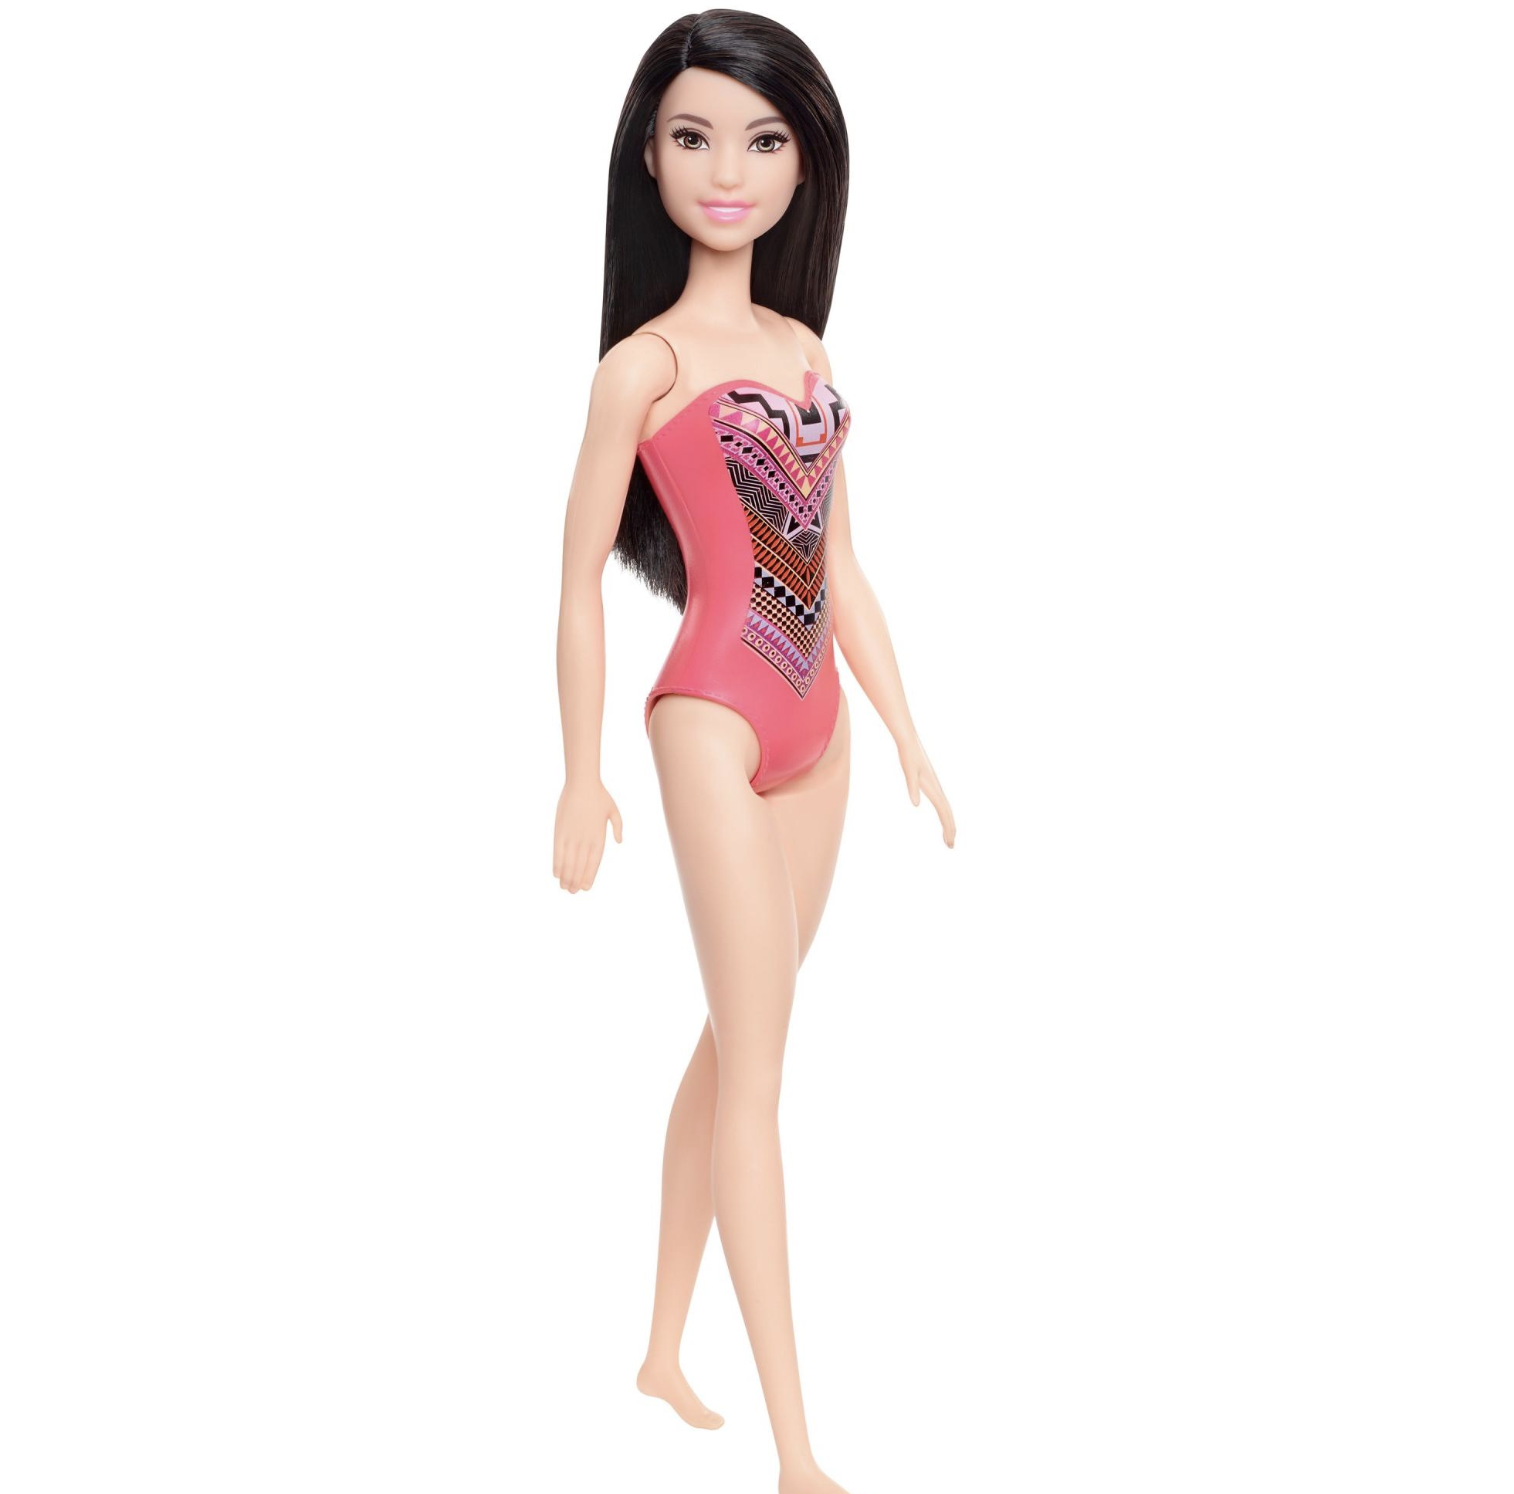 Barbie Beach Doll - Pink One-Piece Swimsuit, Brunette